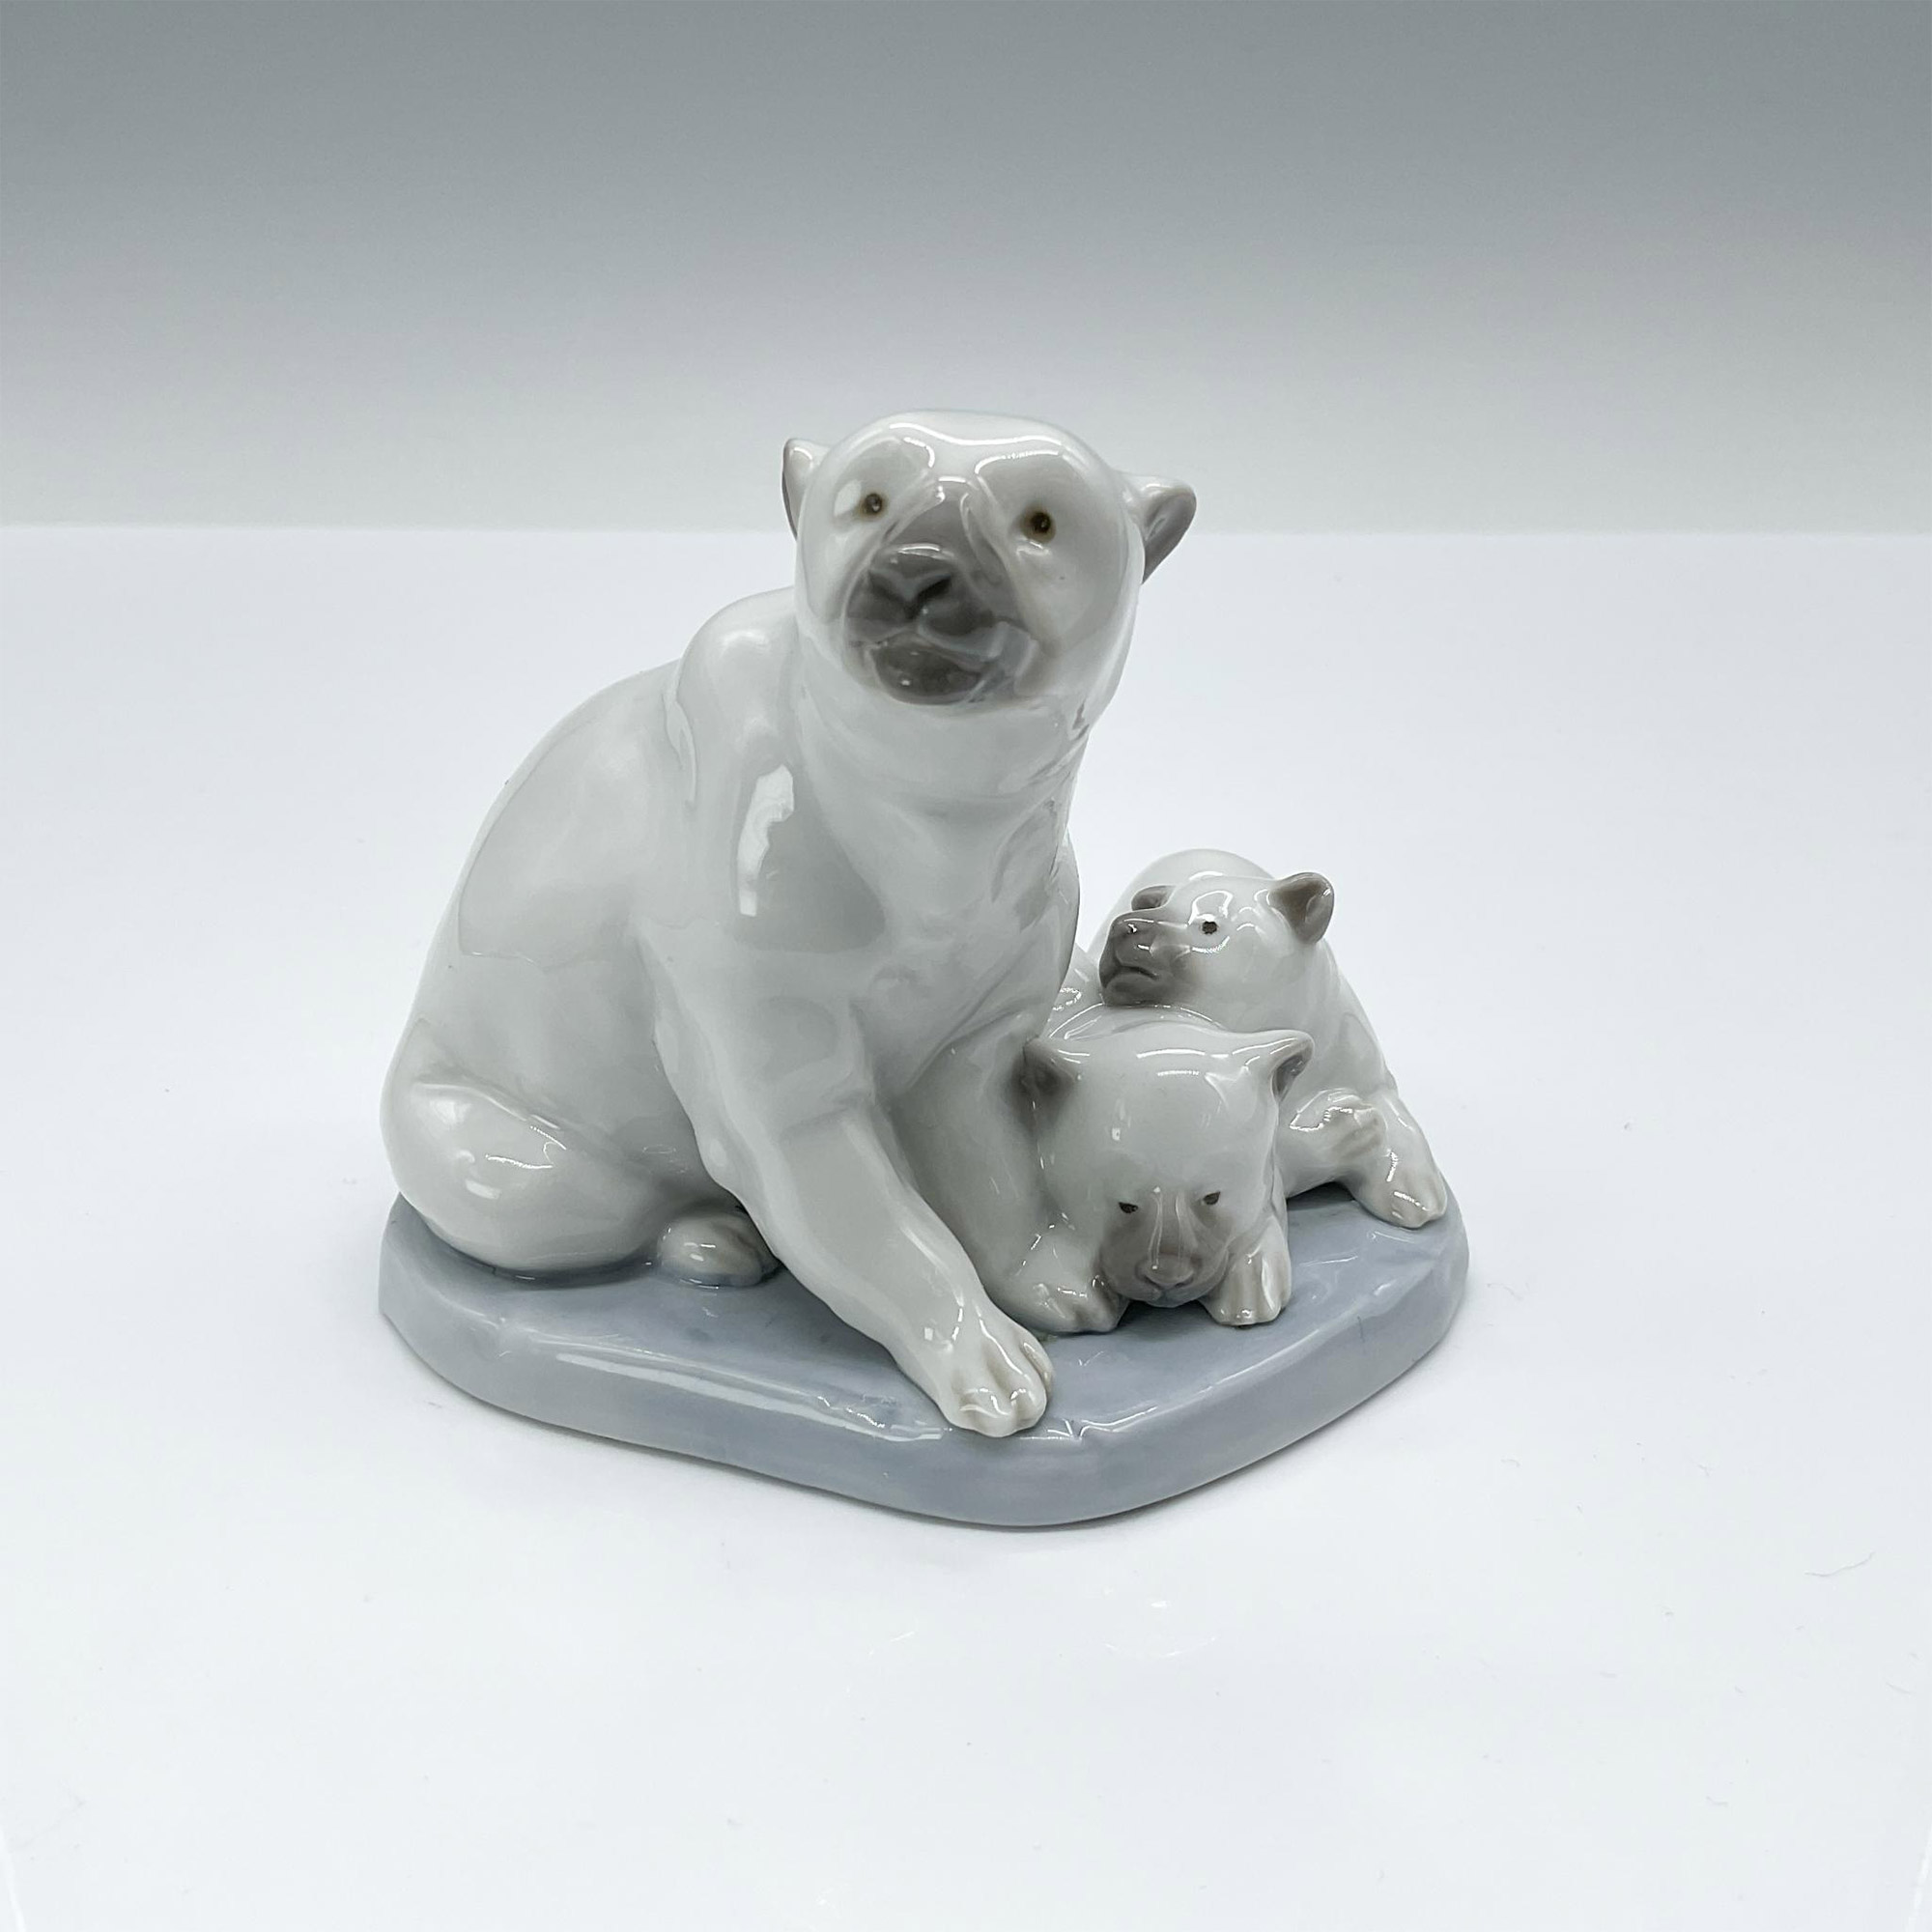 Miniature Polar Bear 1005434 - Lladro Porcelain Figurine